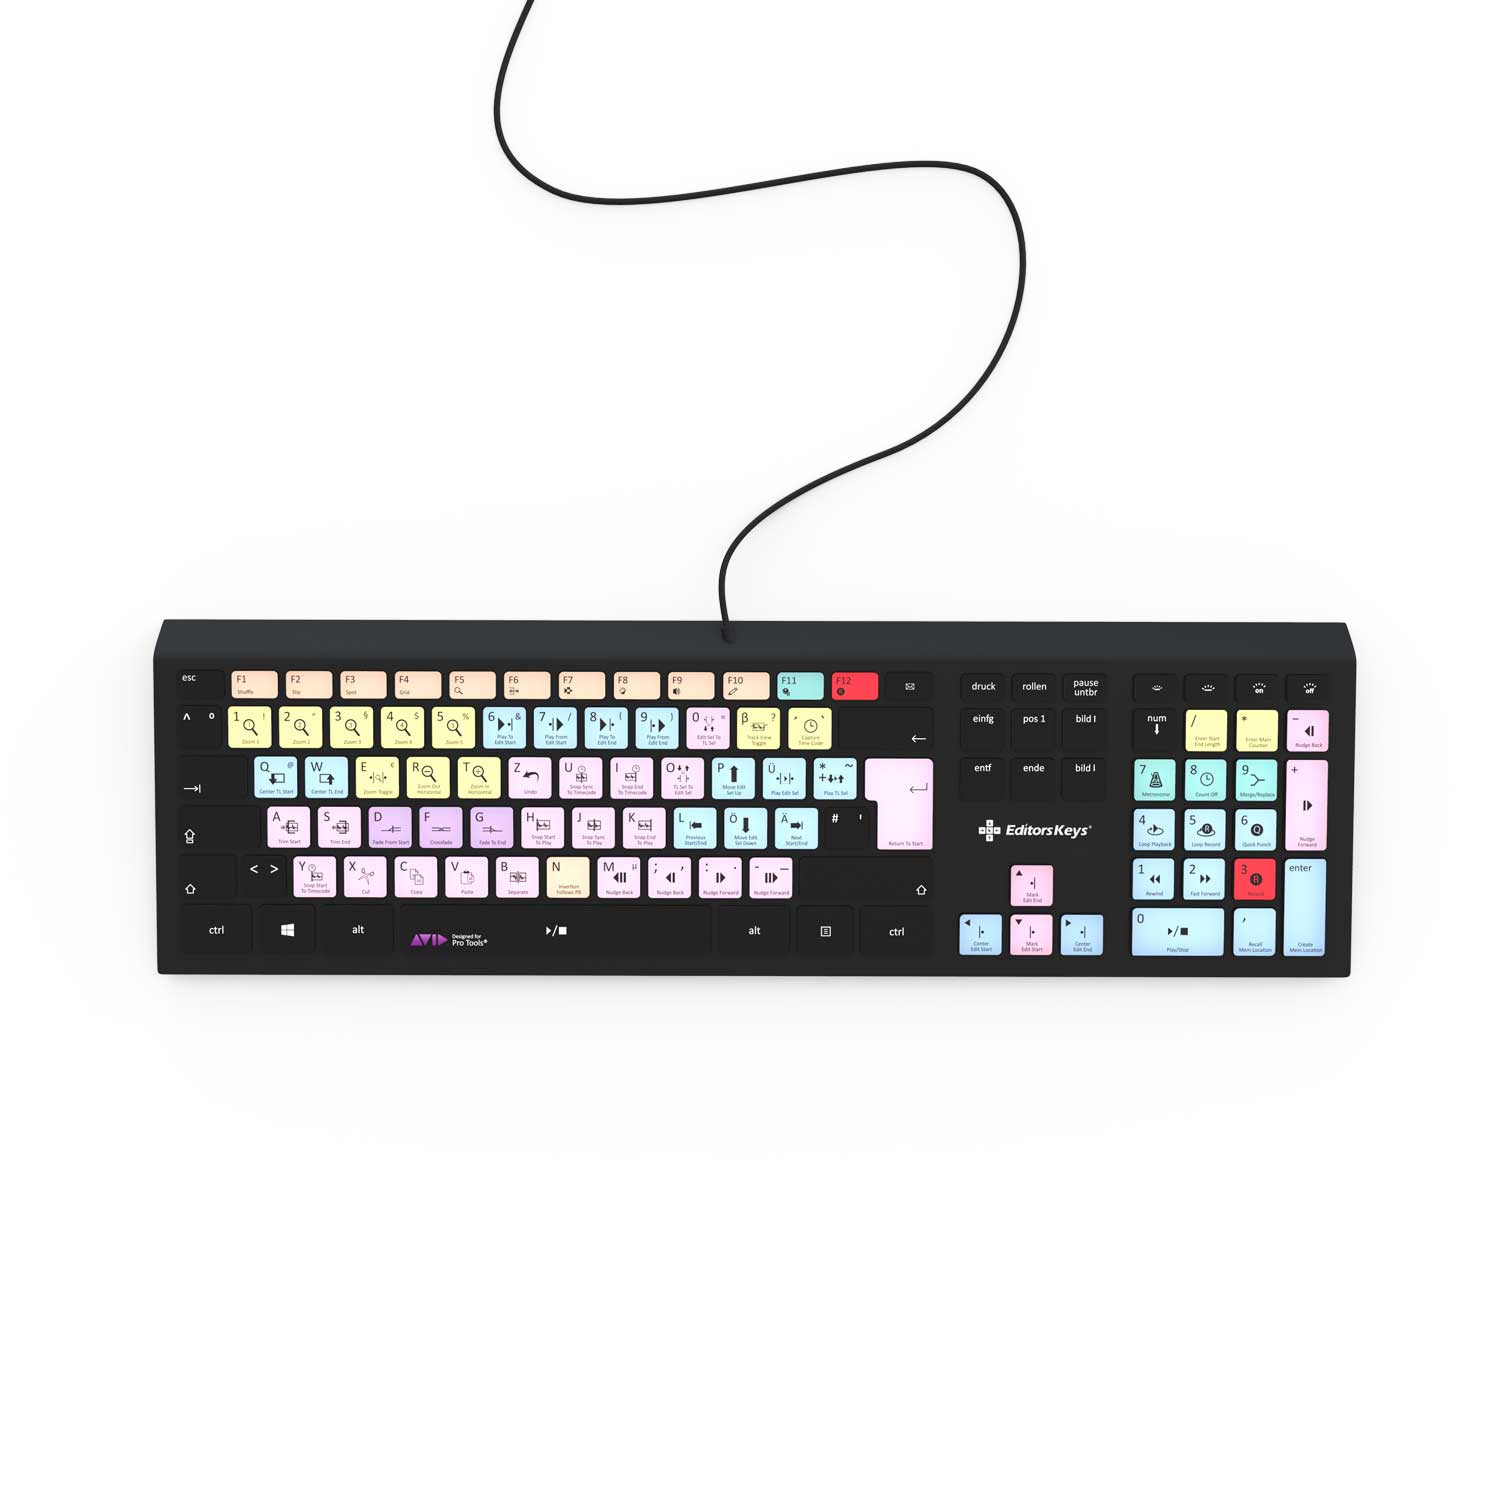 Pro Tools Keyboard - Backlit - For Mac or PC - Editors Keys